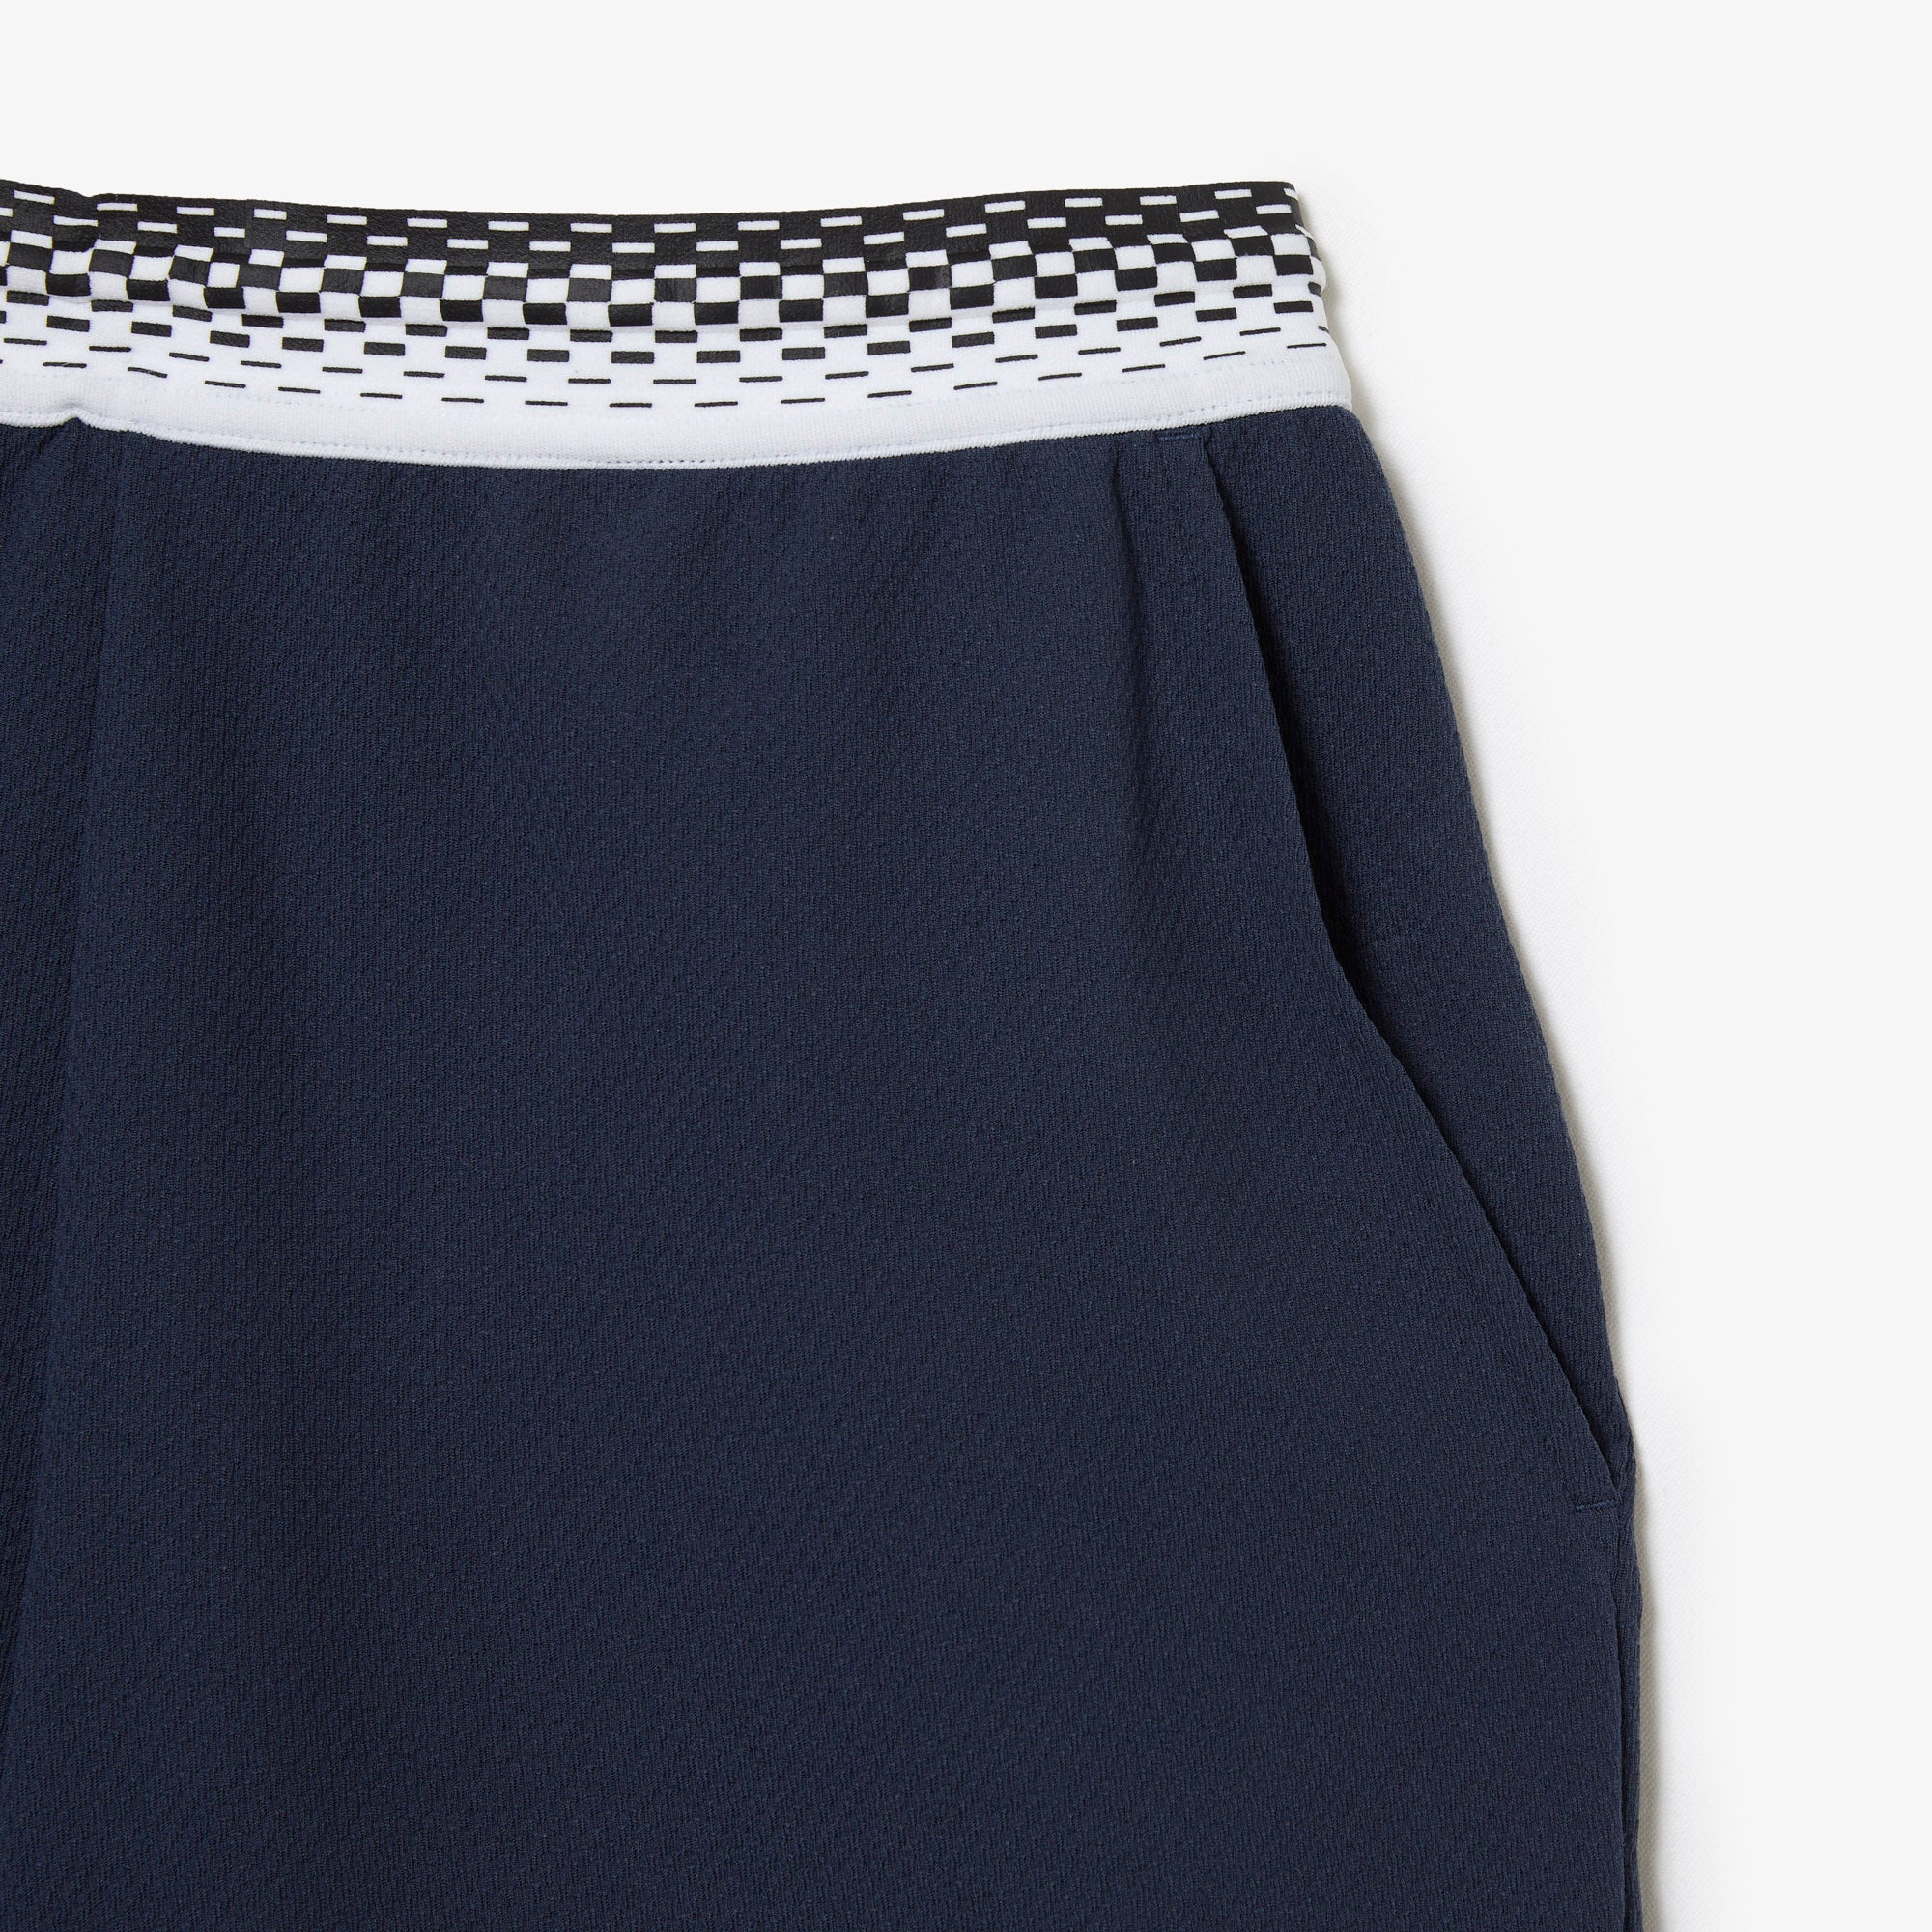 Lacoste Shorts (Night Blue)